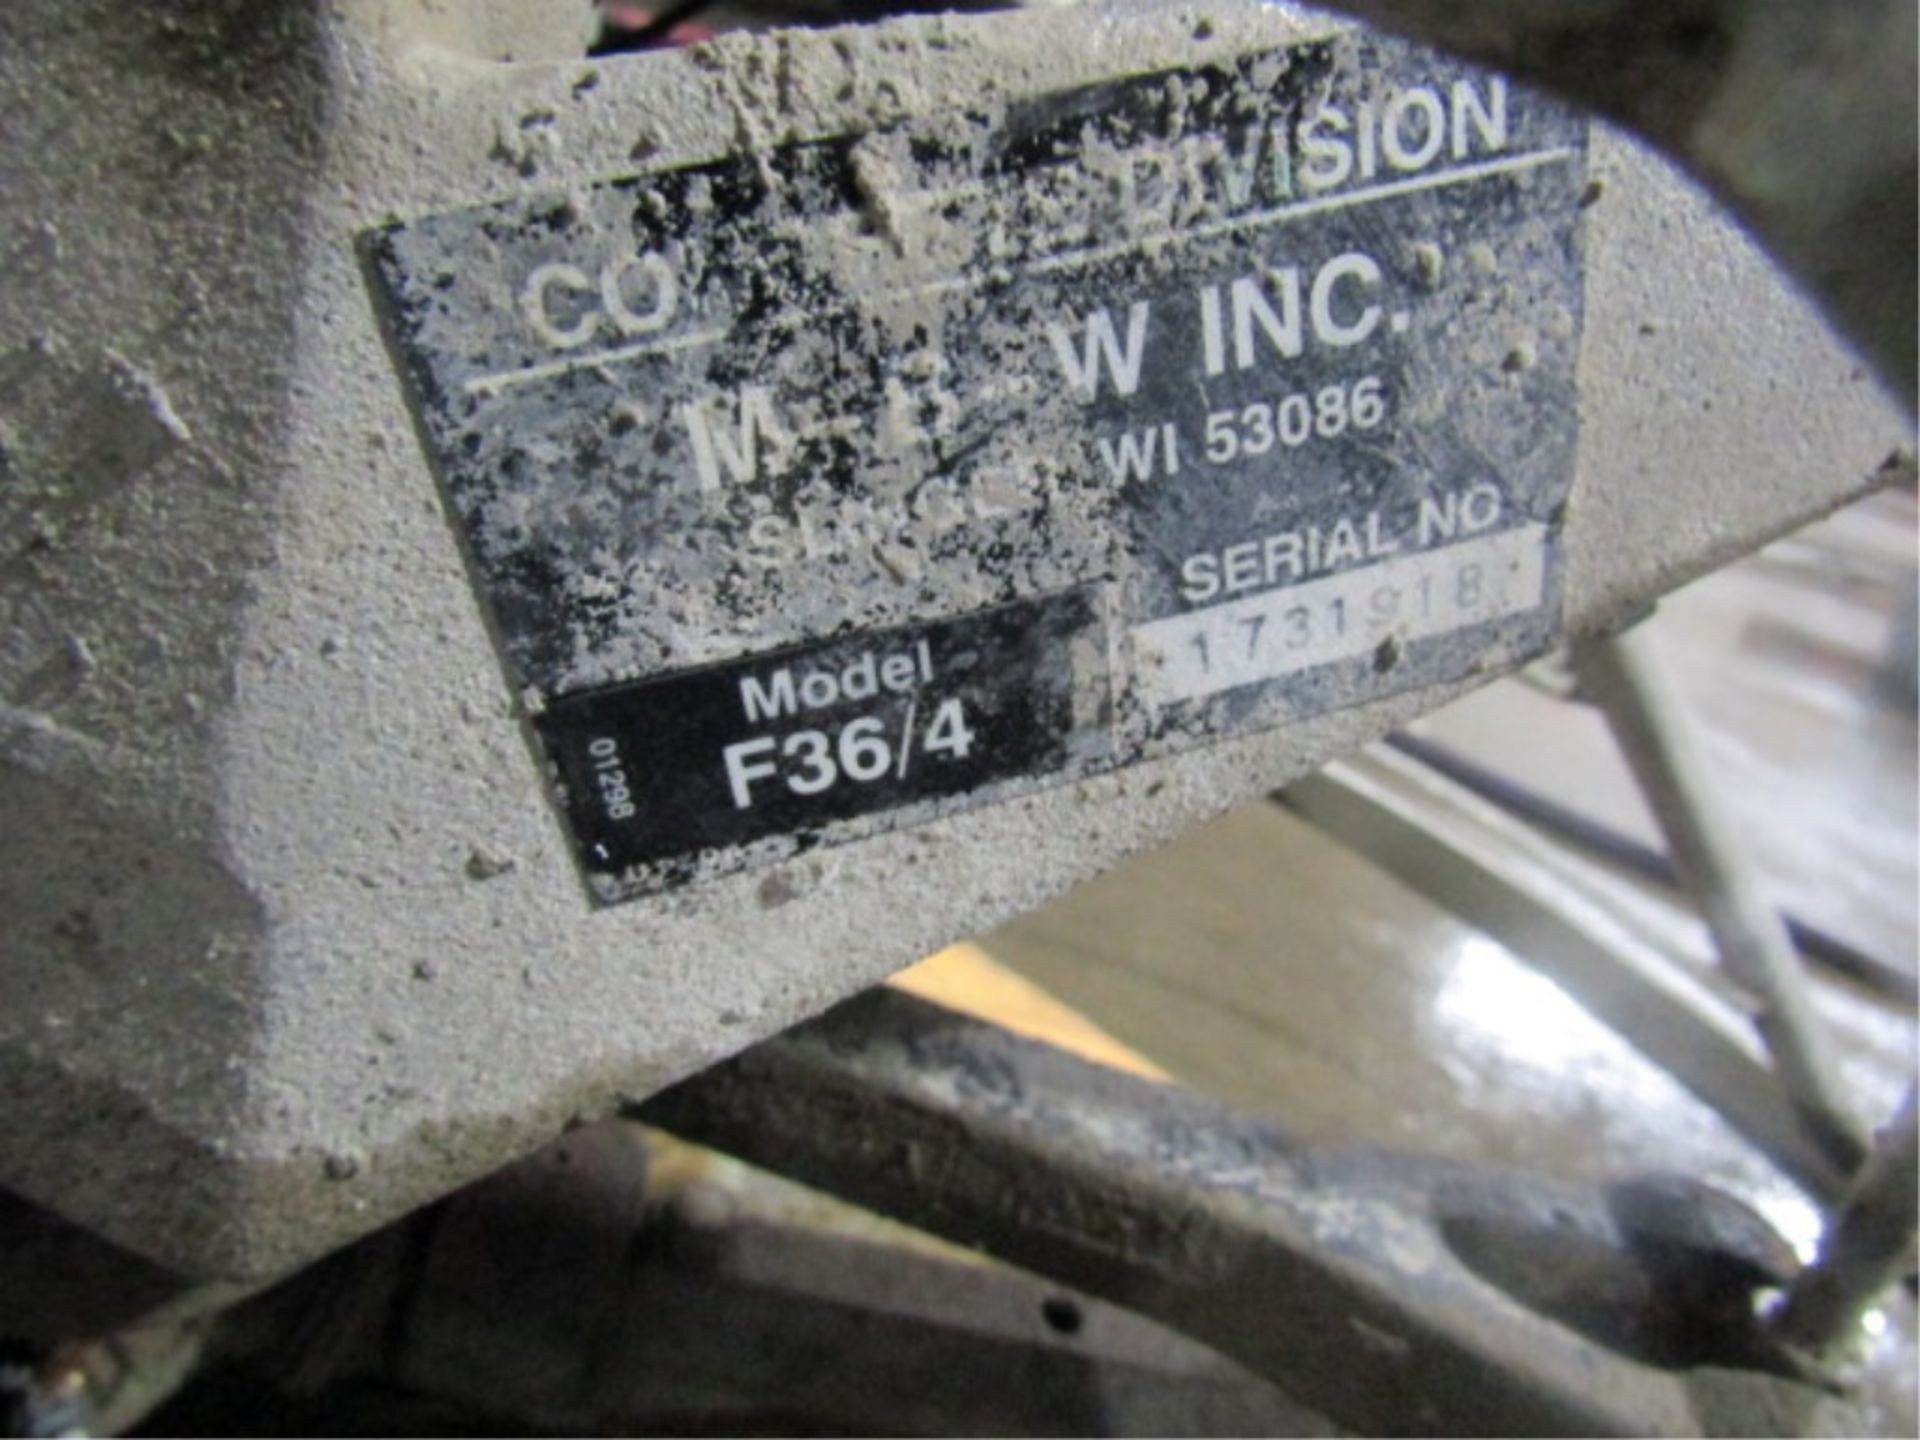 MBW F36/4 Concrete Power Trowel, Honda GX160 5.5, Serial #1731918 - Image 4 of 5